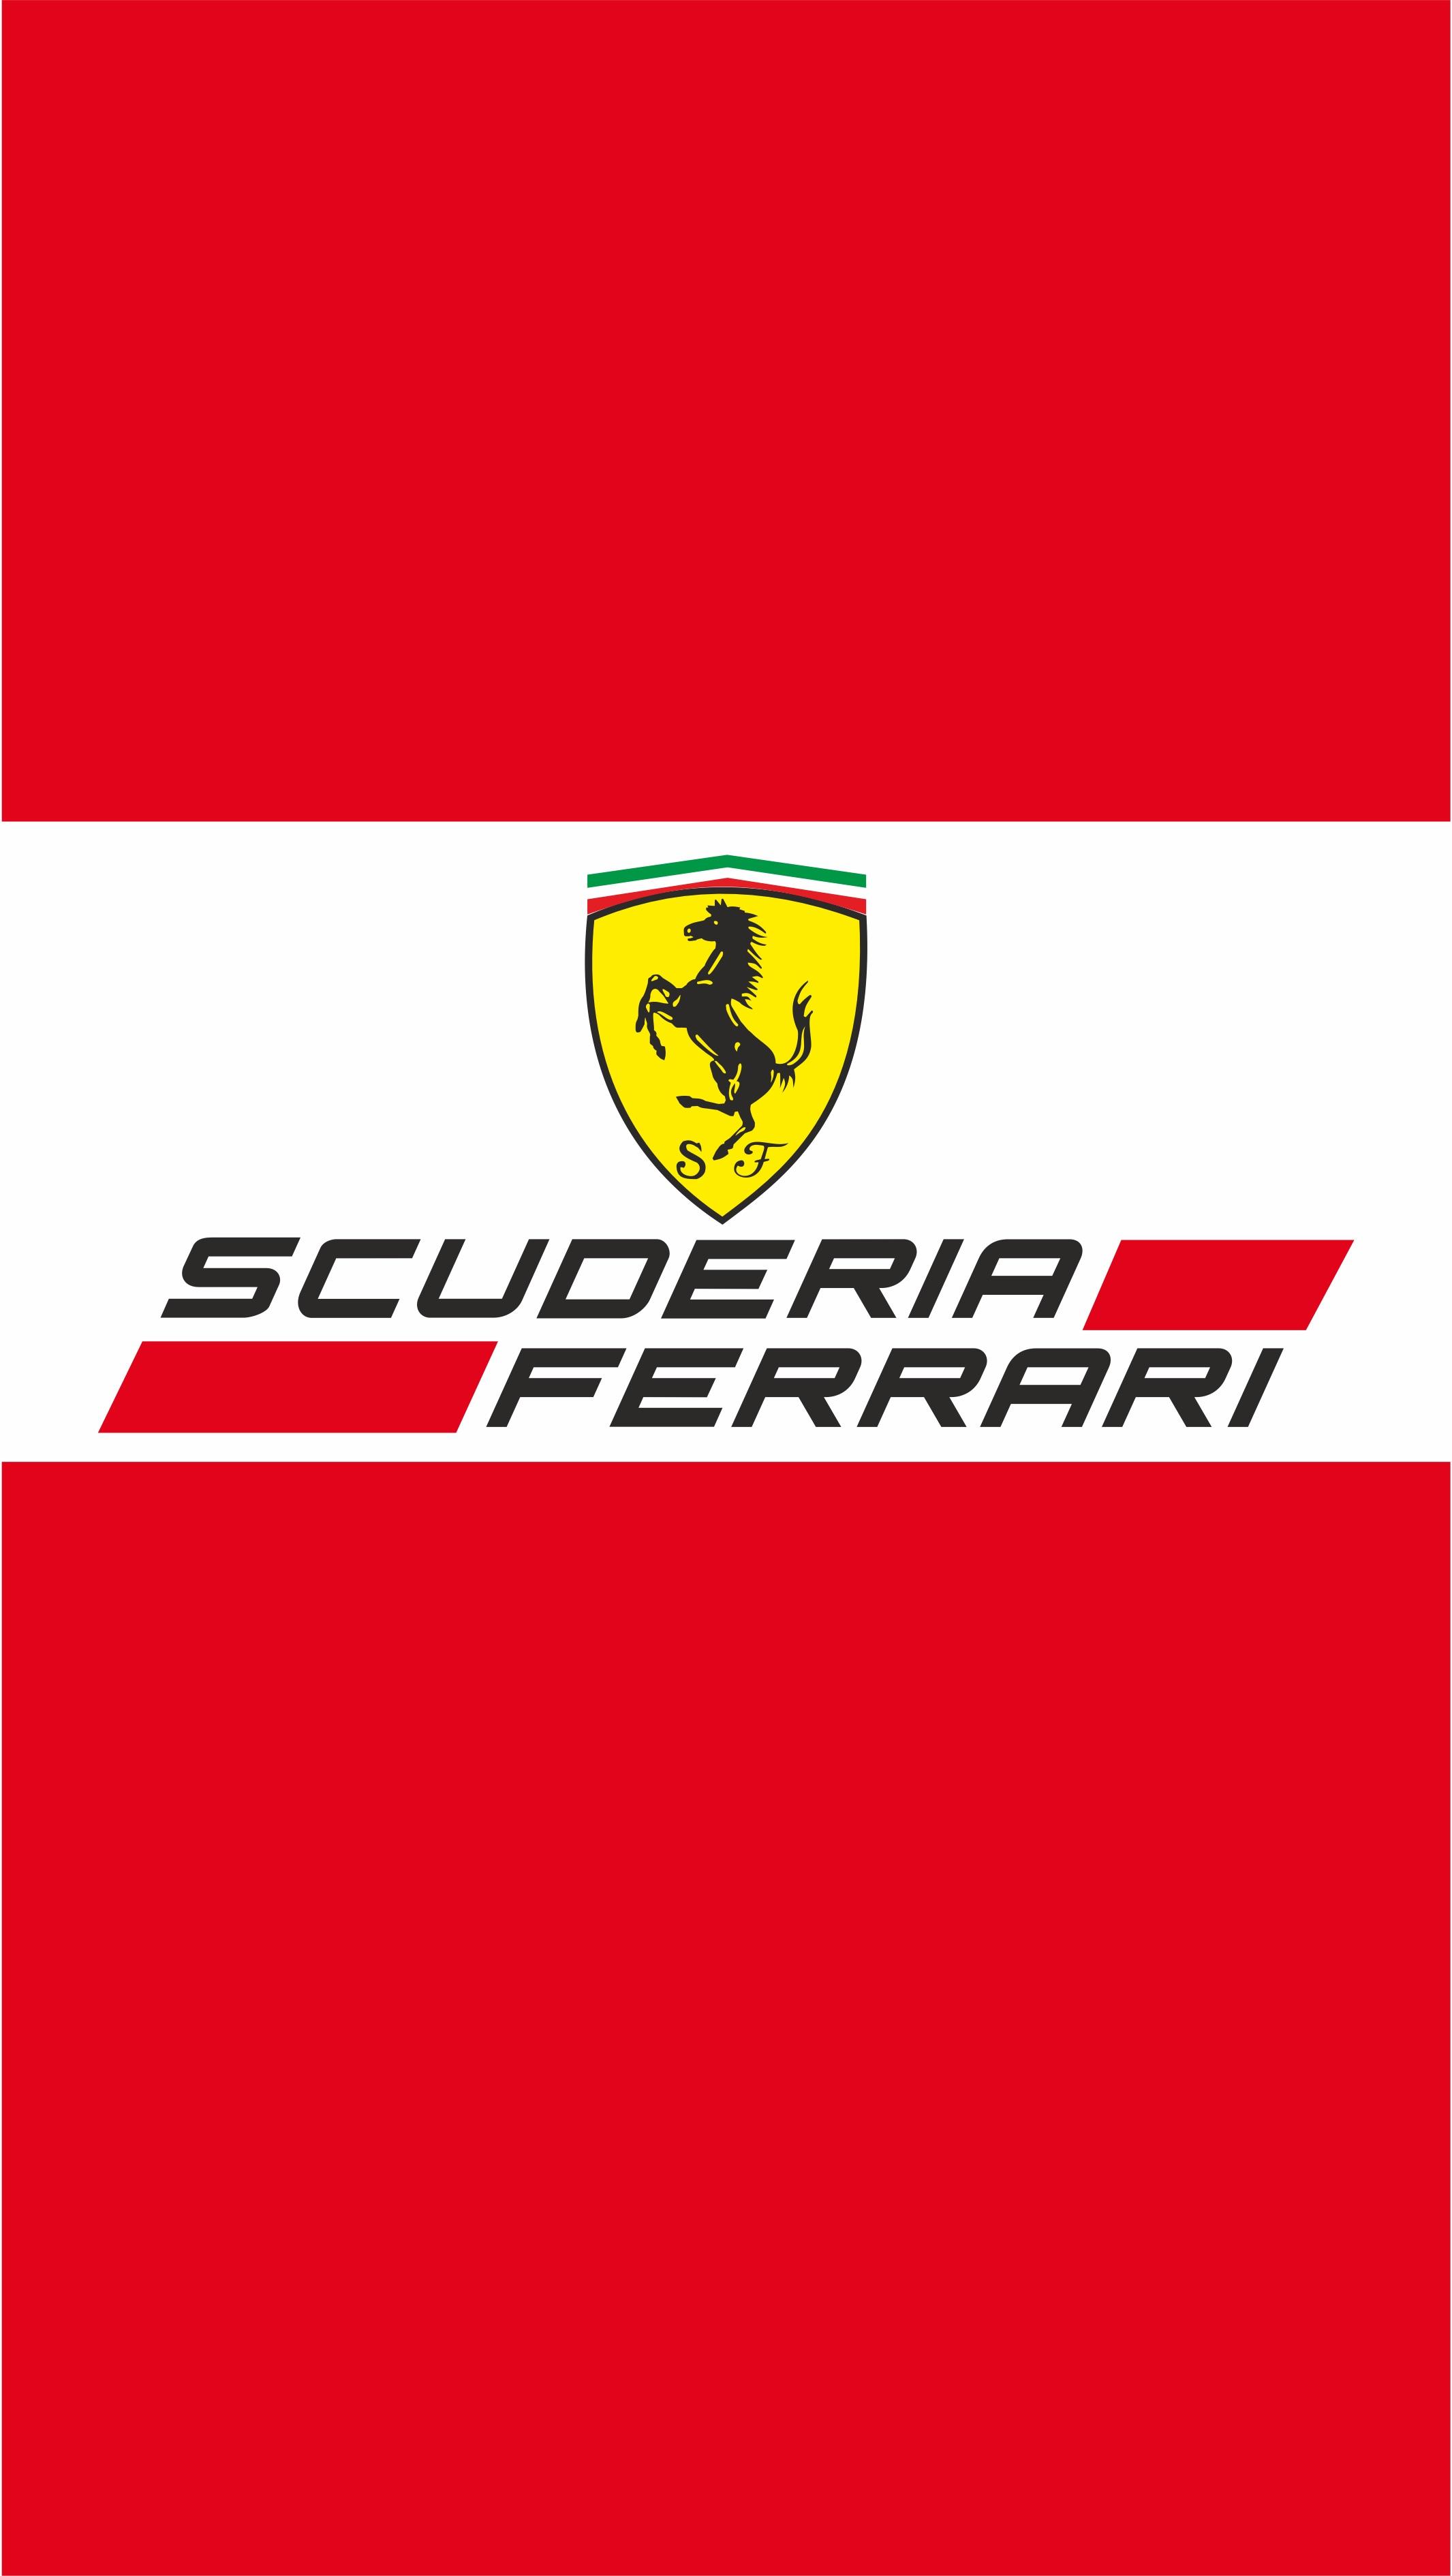 Scuderia Ferrari Wallpapers Top Free Scuderia Ferrari Backgrounds Wallpaperaccess